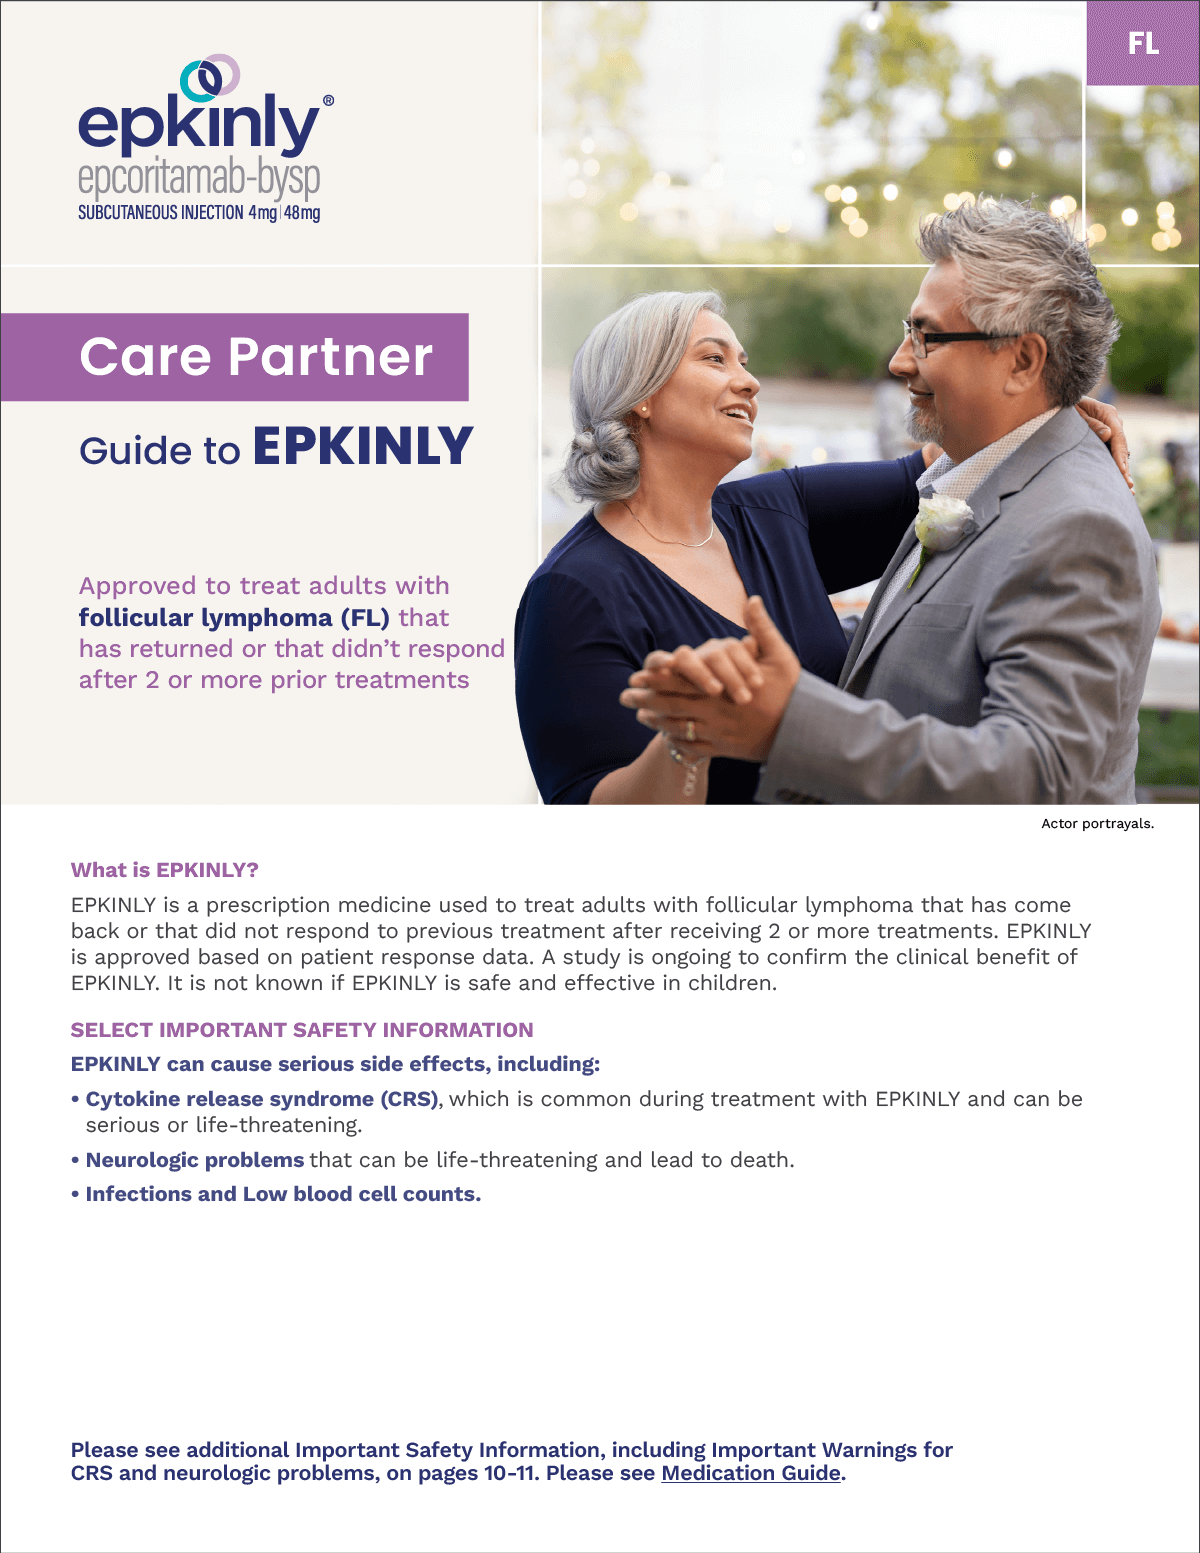 Download the EPKINLY® Care Partner Brochure for FL.